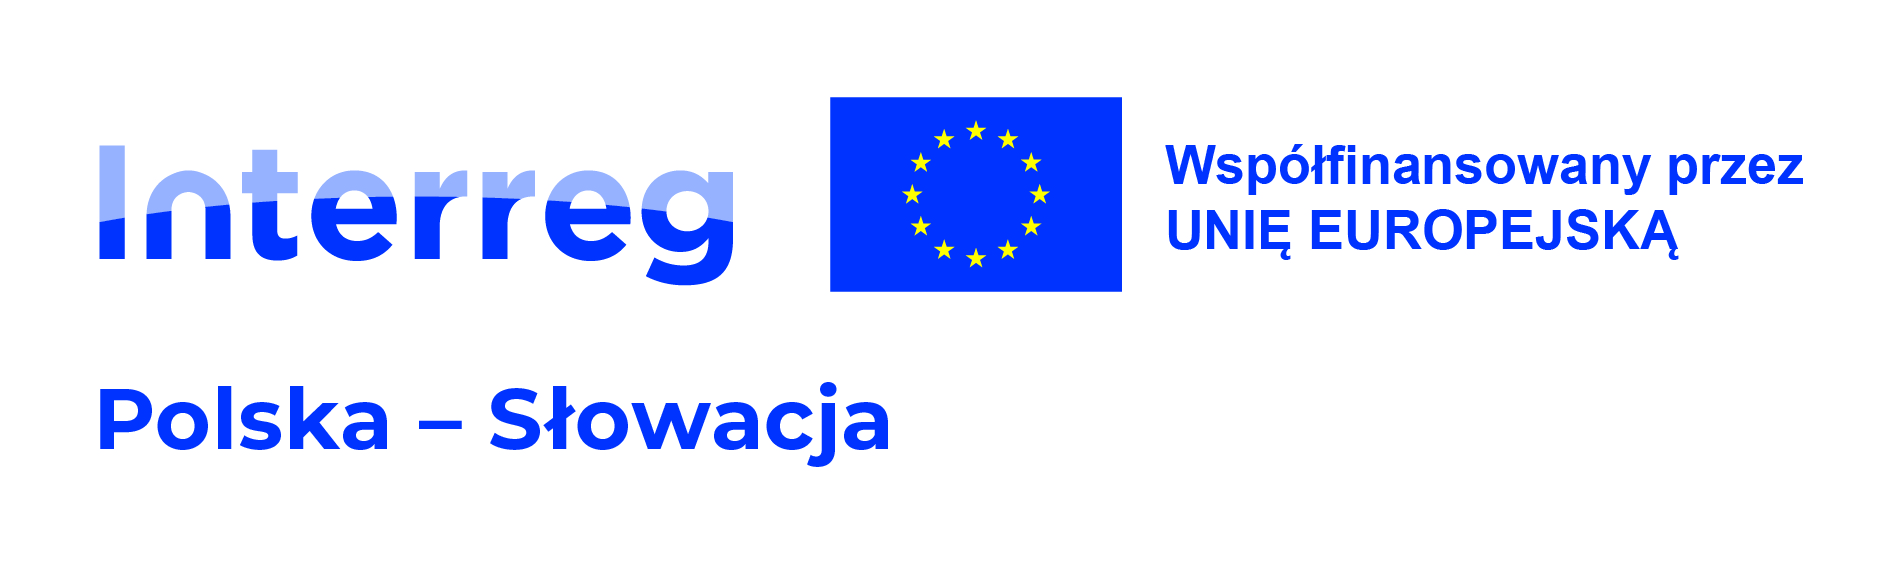 Logo Polska - Slovensko (Polska) CMYK Color-02